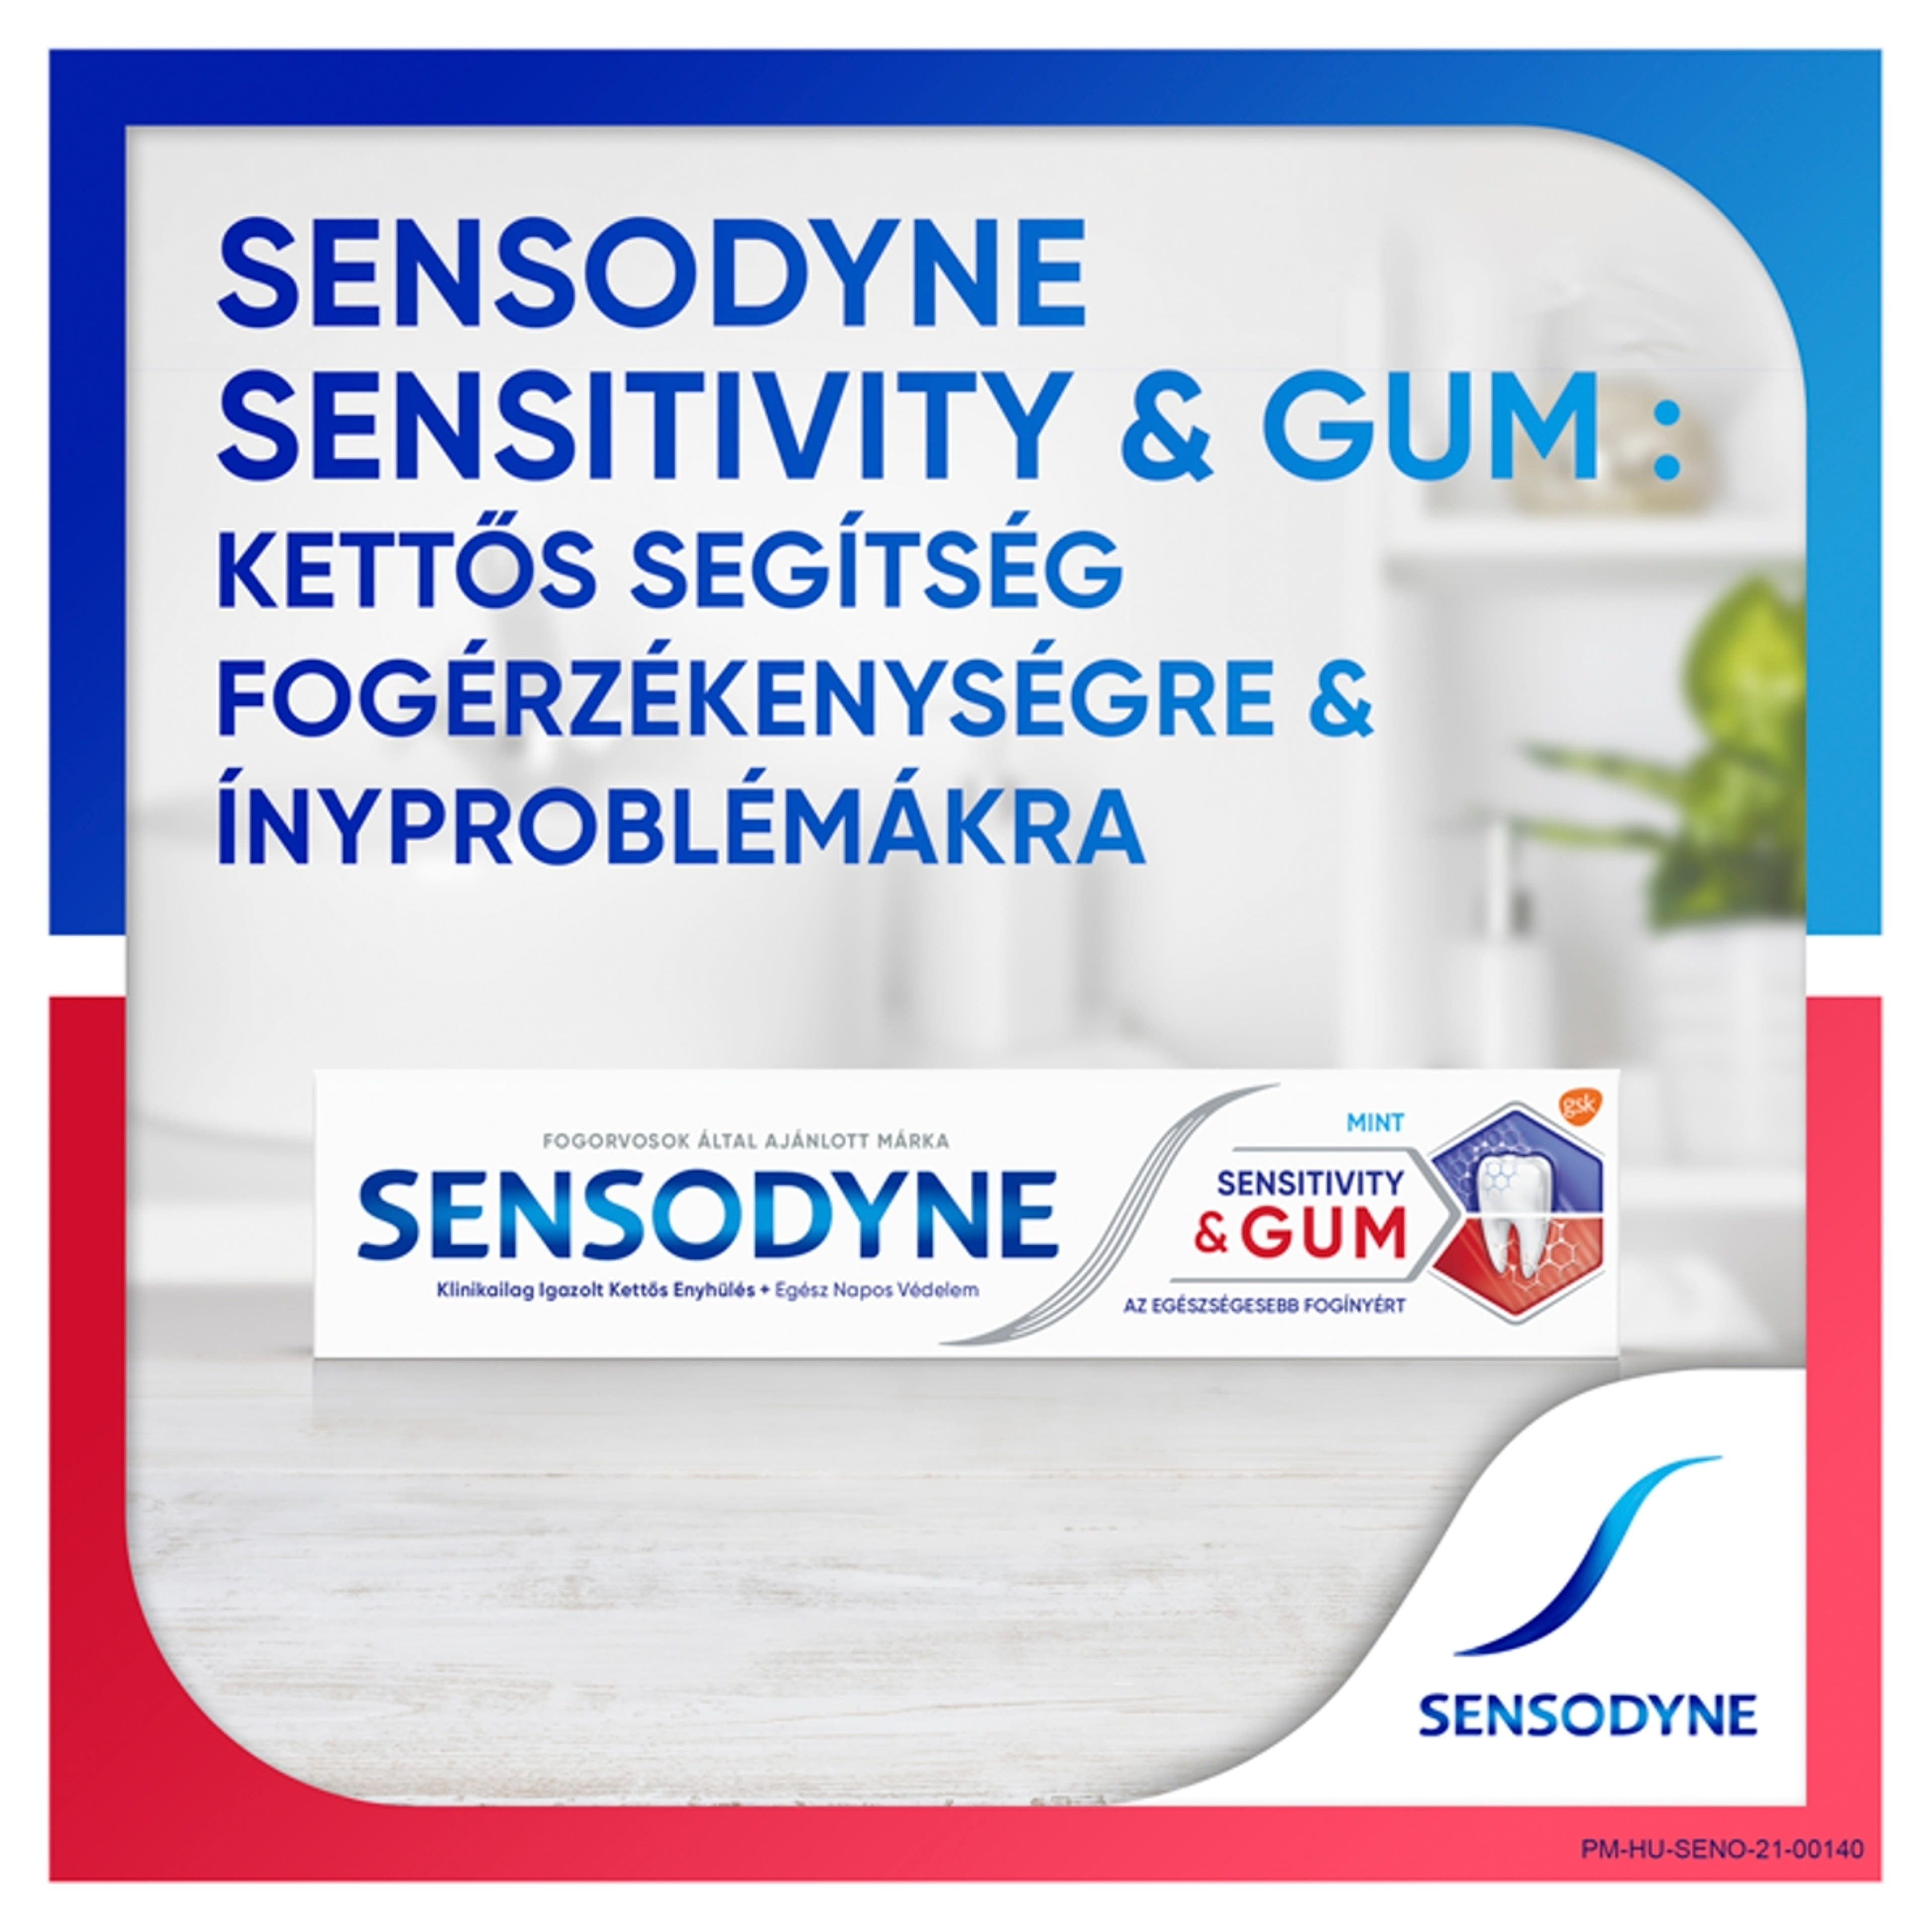 Sensodyne Sensitivity & Gum fogkrém - 75 ml-5